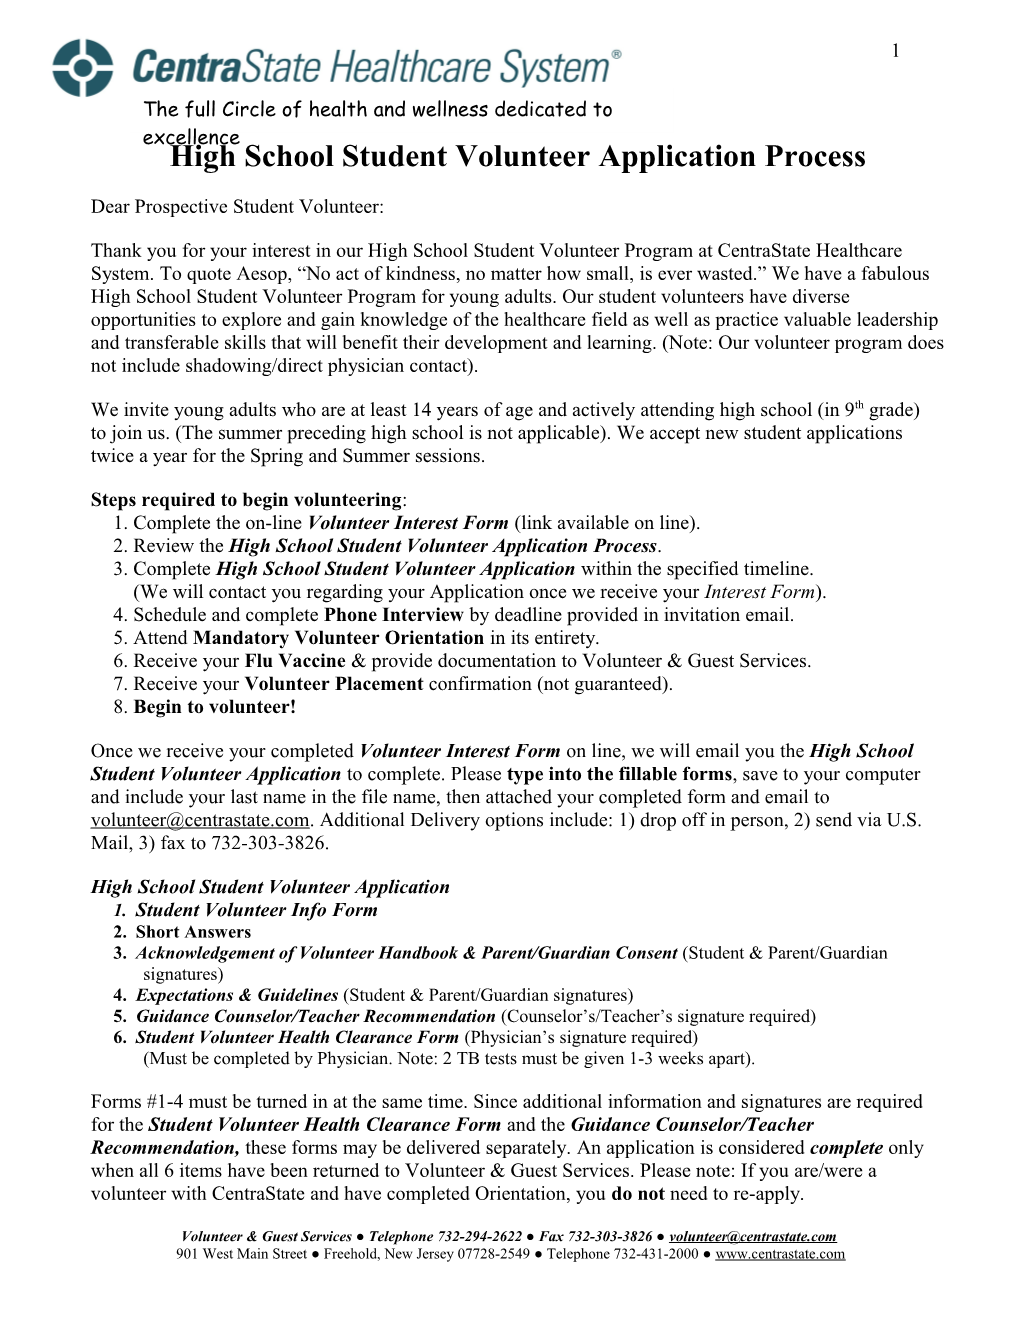 High School Student Volunteer Application Process